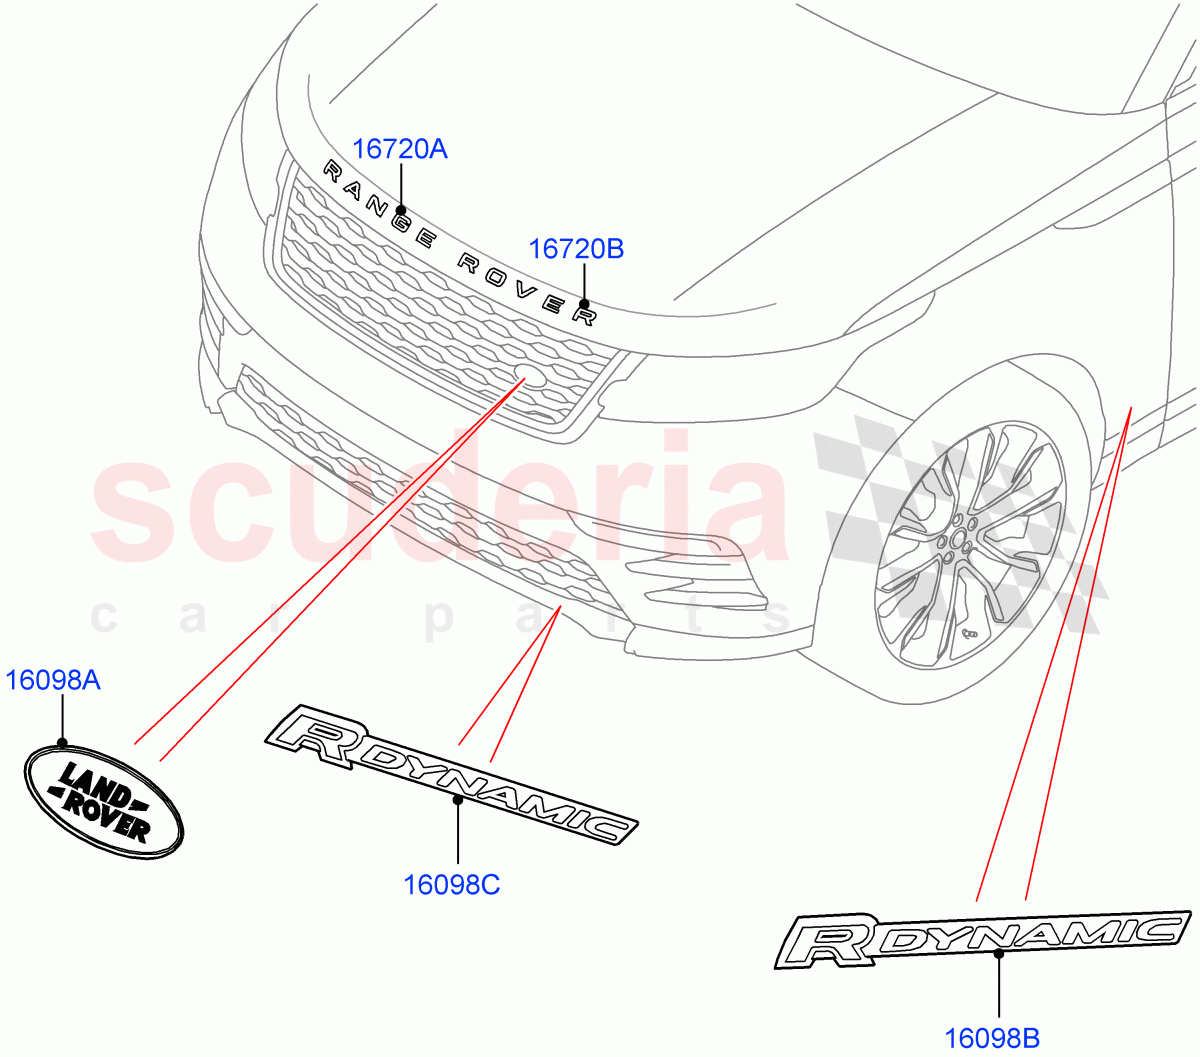 Name Plates(Front)(Version - Core,Version - R-Dynamic) of Land Rover Land Rover Range Rover Velar (2017+) [3.0 DOHC GDI SC V6 Petrol]